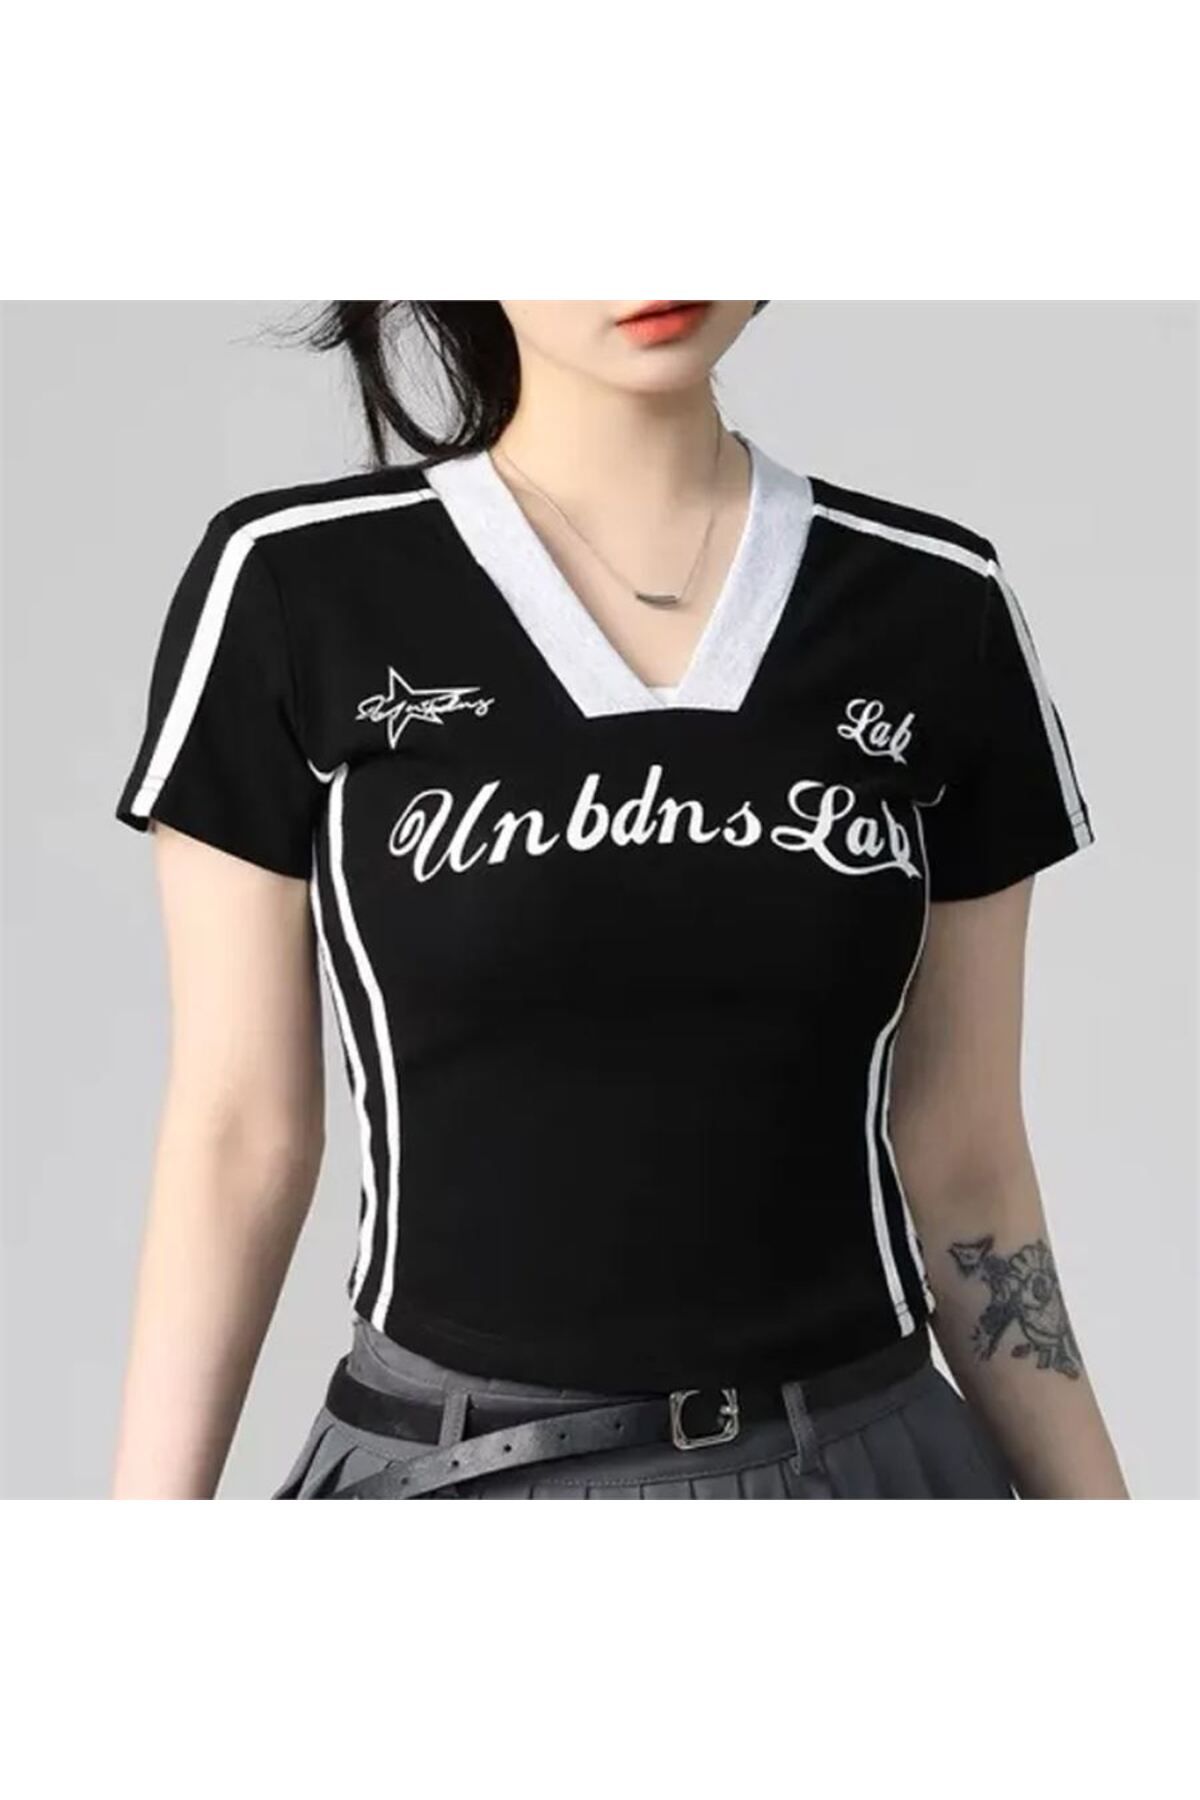 Gofeel Black Unbdns Lab Uniform - T-Shirt Half Trendyol